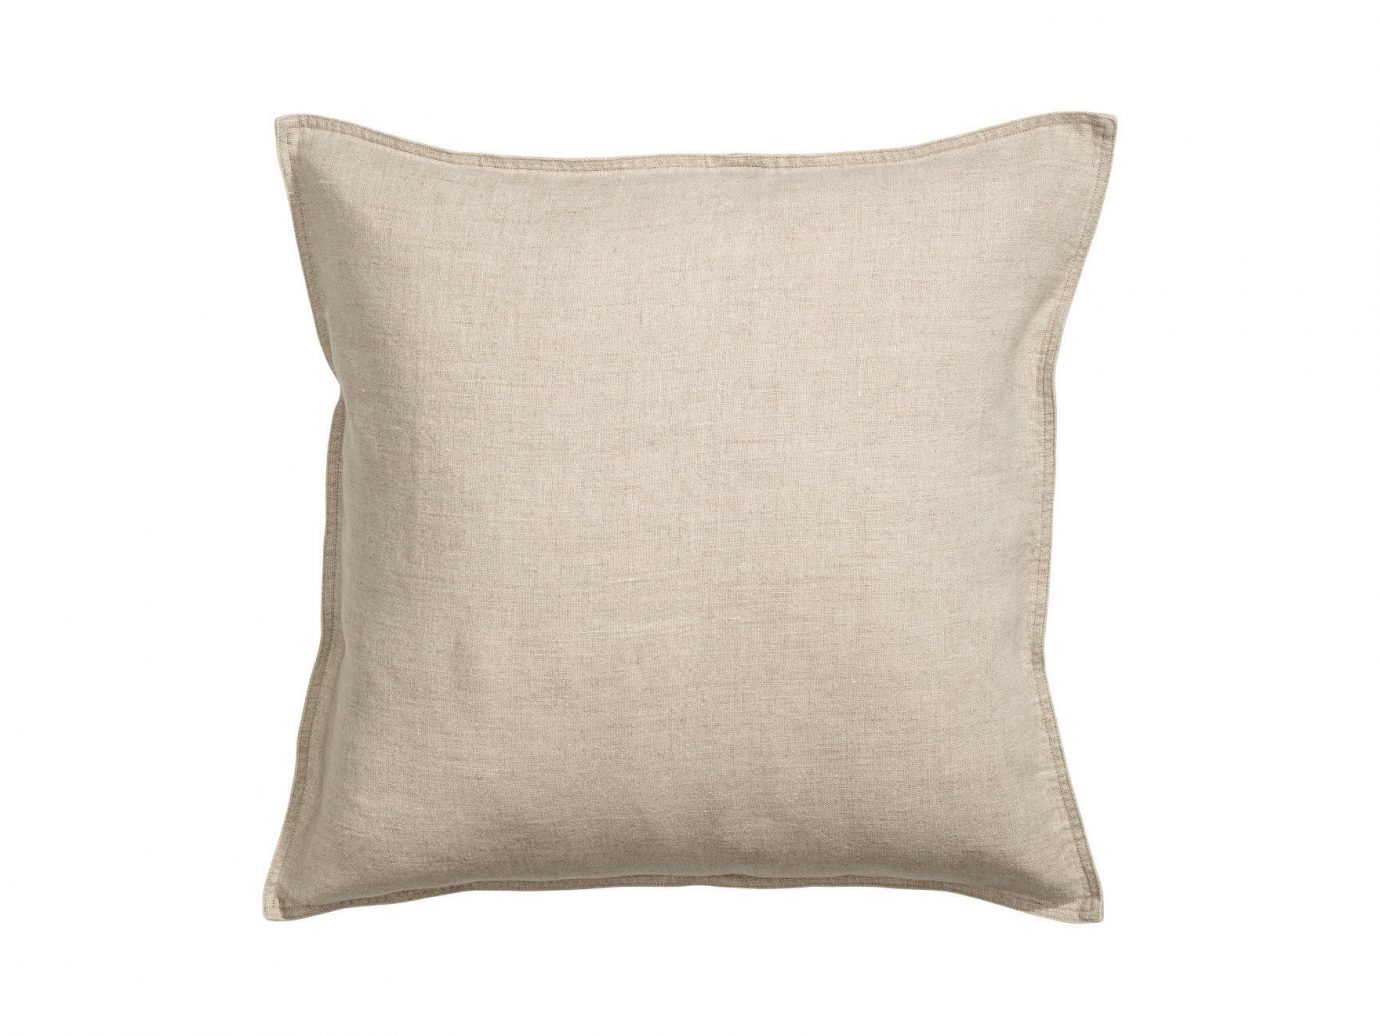 City Copenhagen Kyoto Marrakech Palm Springs Style + Design Travel Shop Tulum throw pillow cushion pillow beige product design